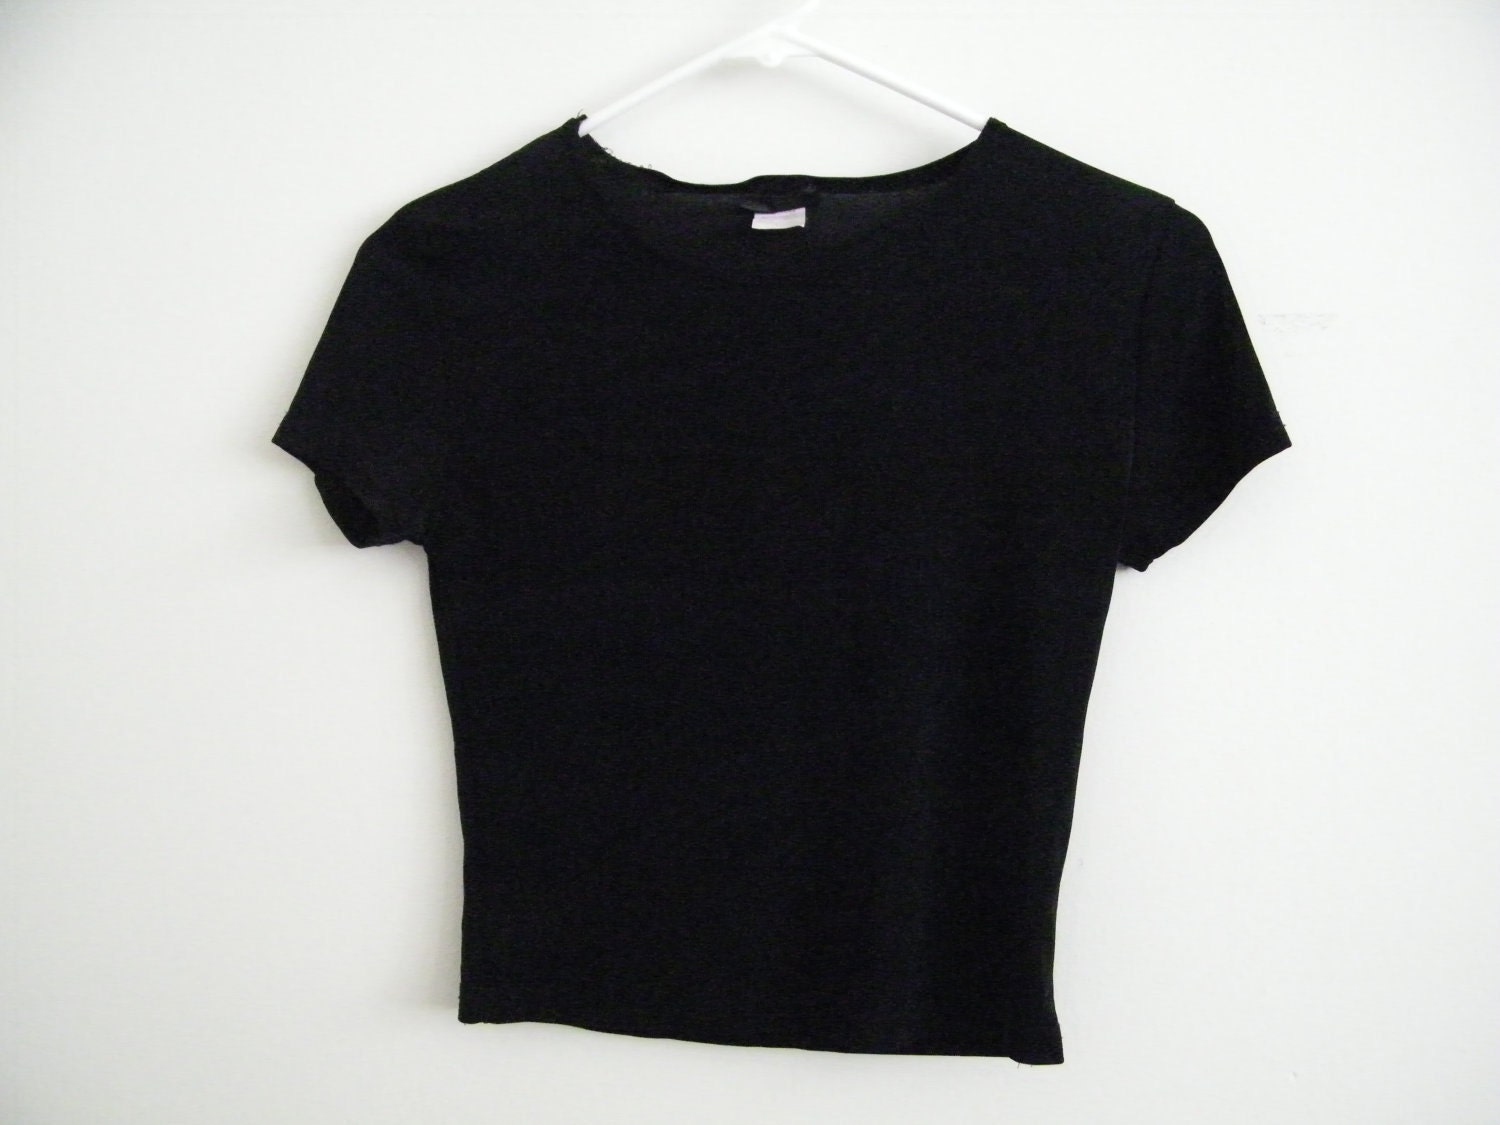 Plain Black Crop Top T-Shirt Sz: Small/X-Small